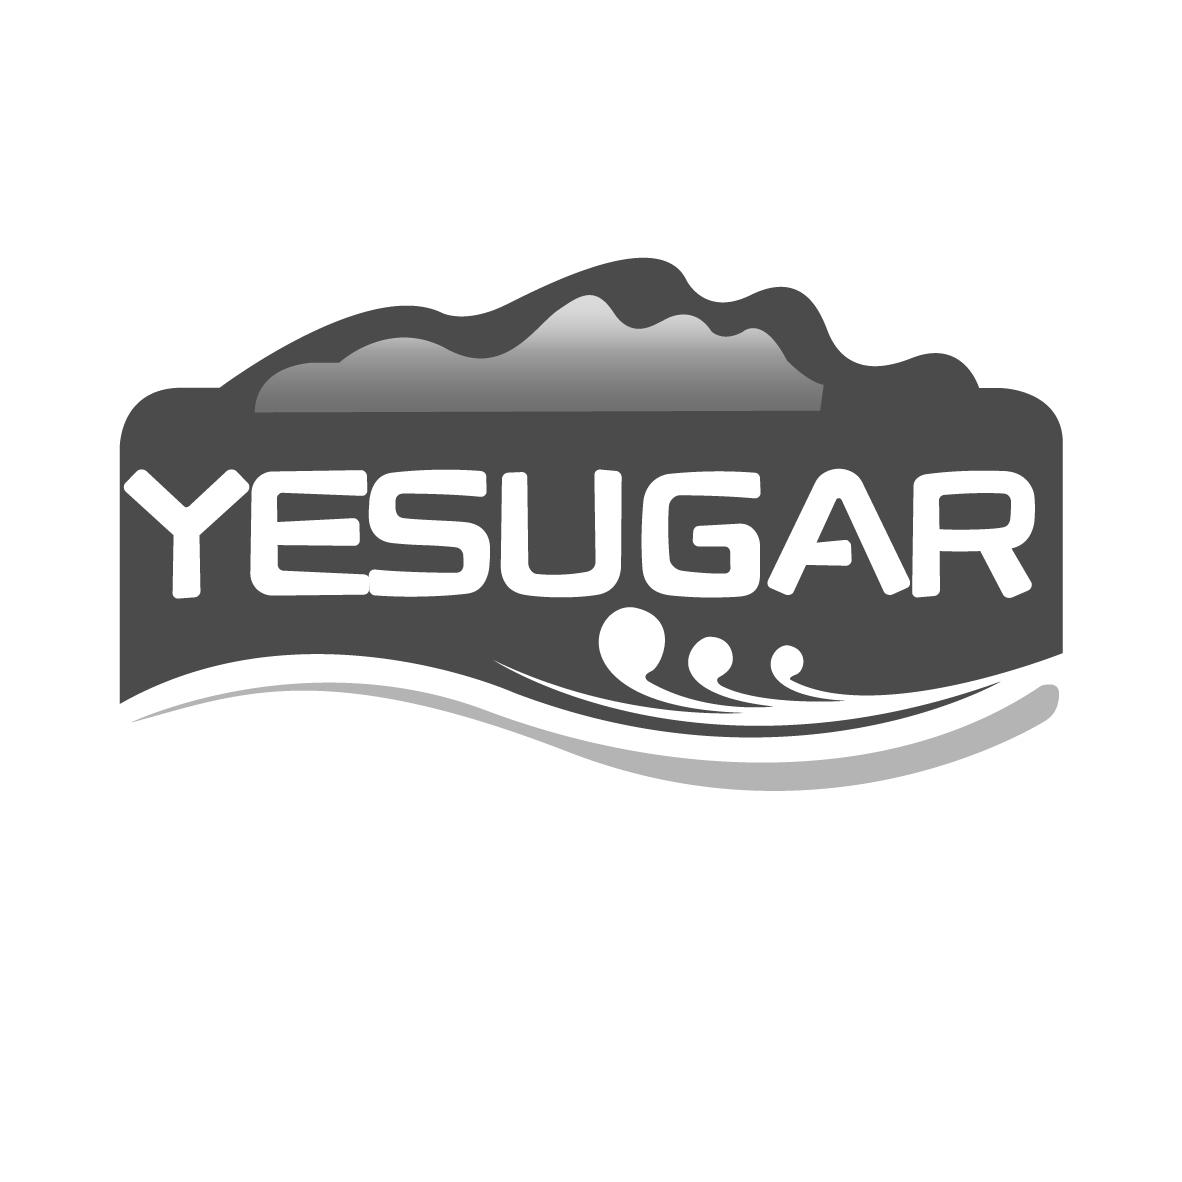 30类-面点饮品YESUGAR商标转让